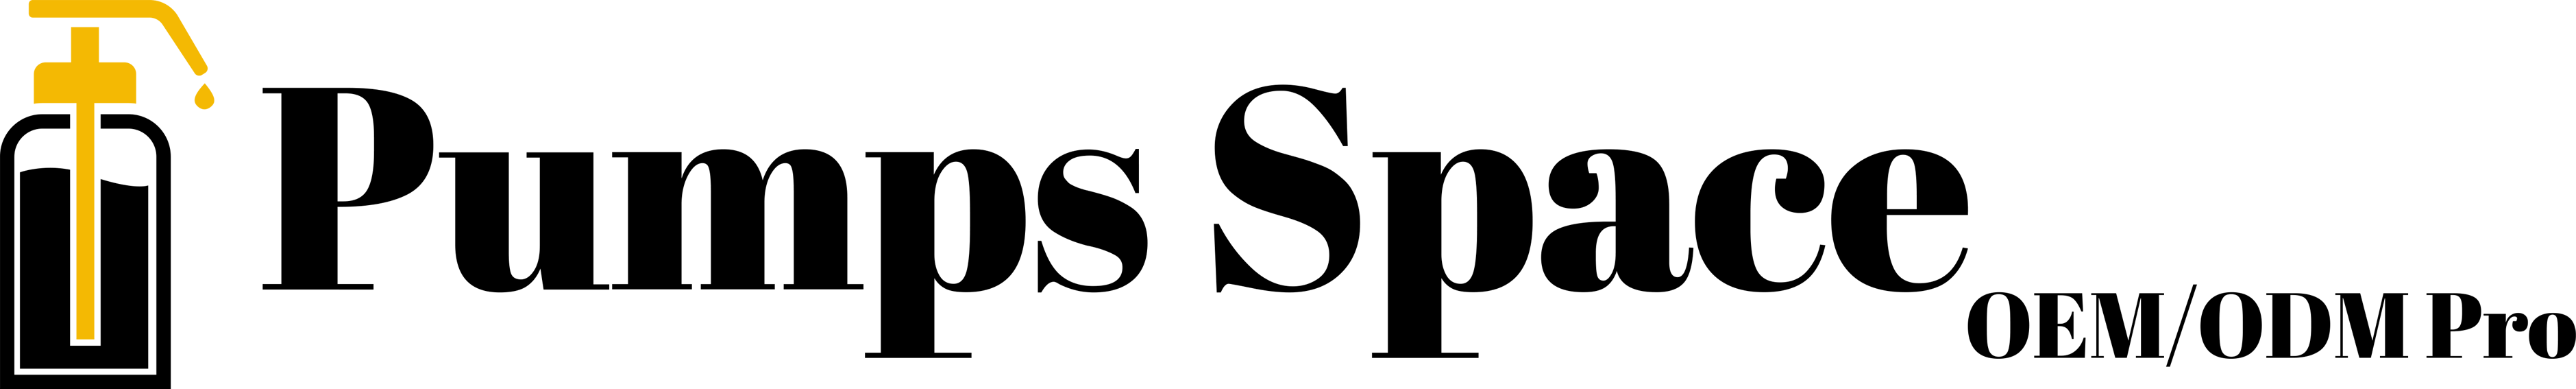 pumpsspace logo